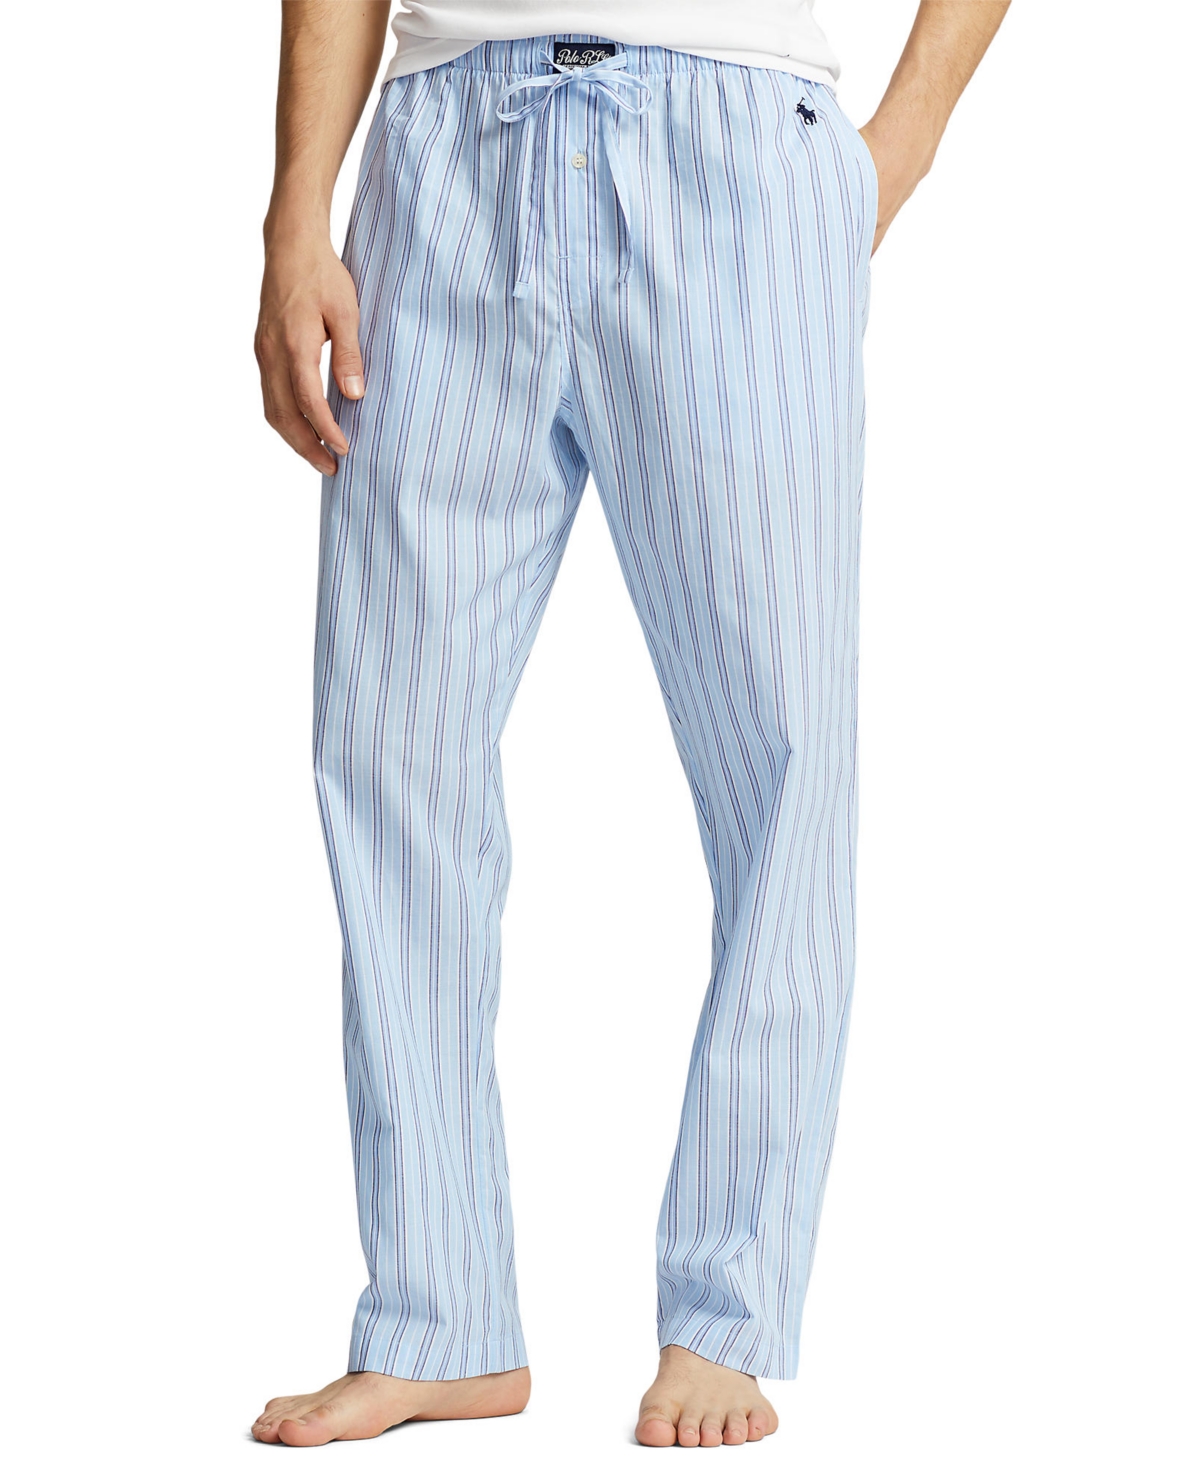 Men's Printed Woven Pajama Pants - MARINA STRIPE/CRUISE NAVY PP